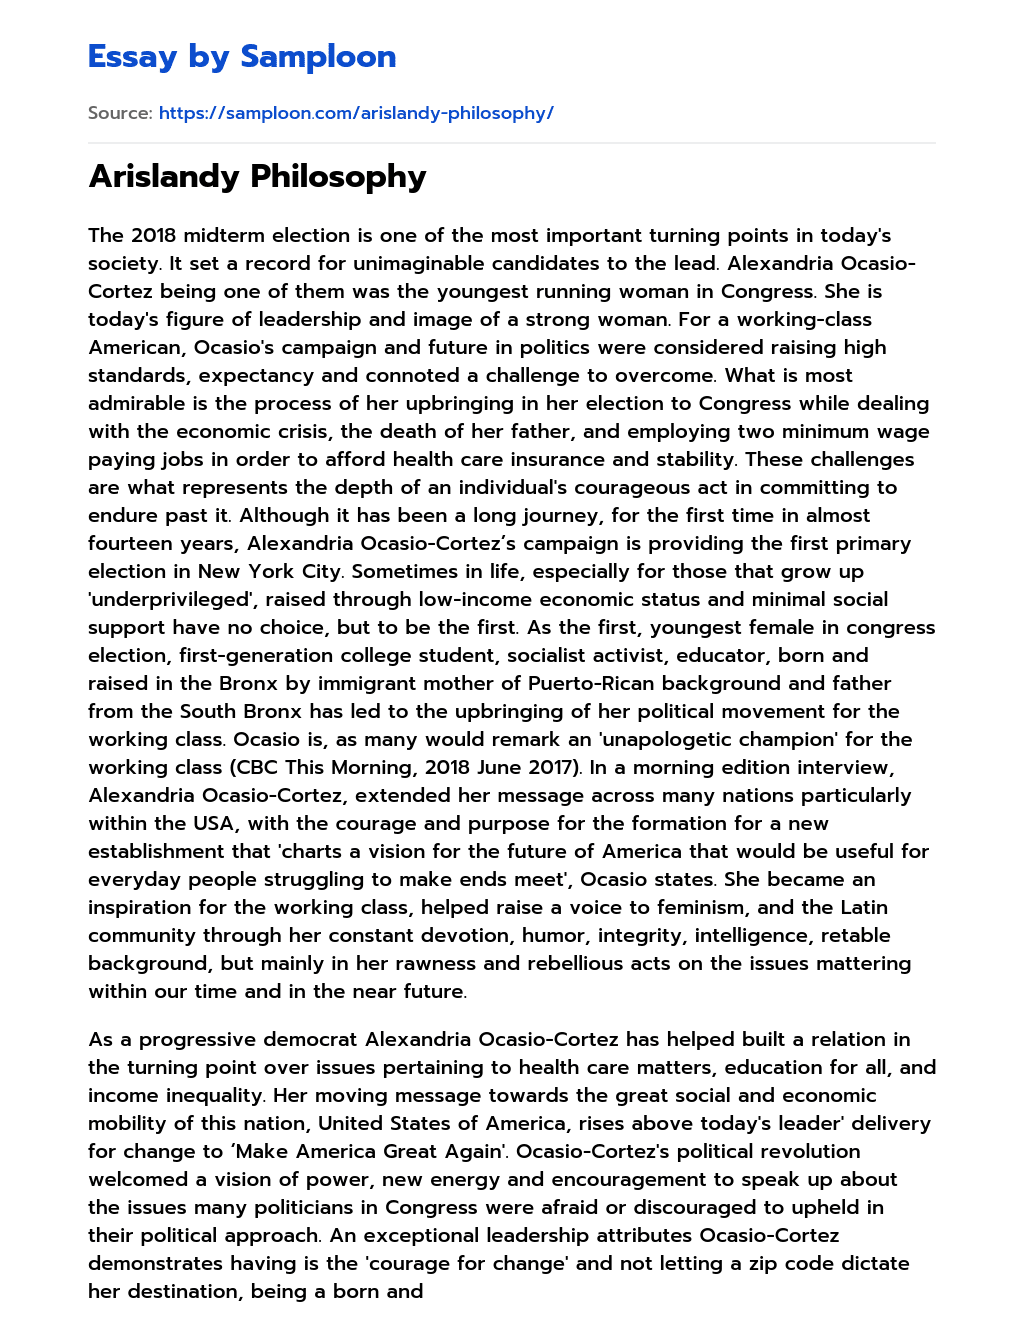 Arislandy Philosophy essay